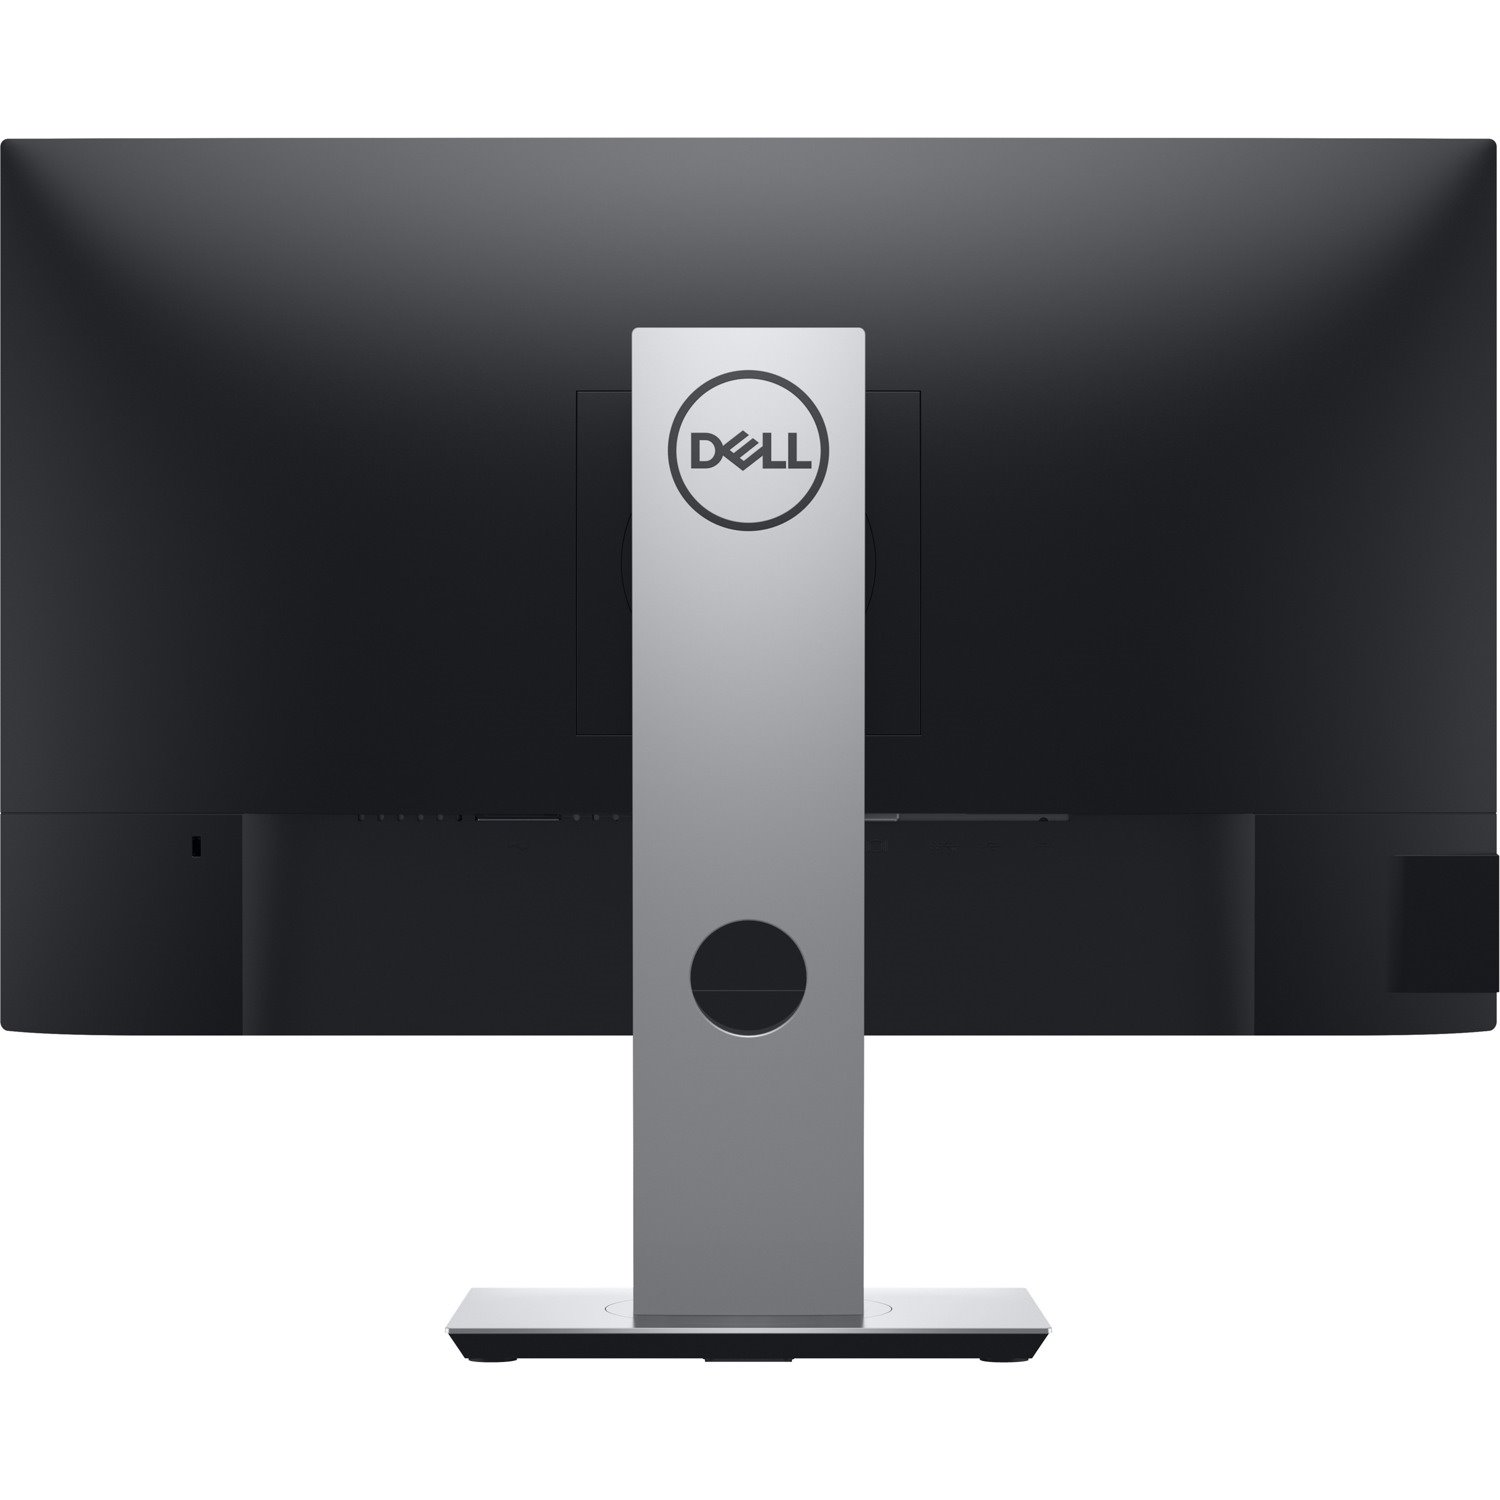 Dell P2419H 24" Class Full HD LCD Monitor - 16:9 - Black, Gray